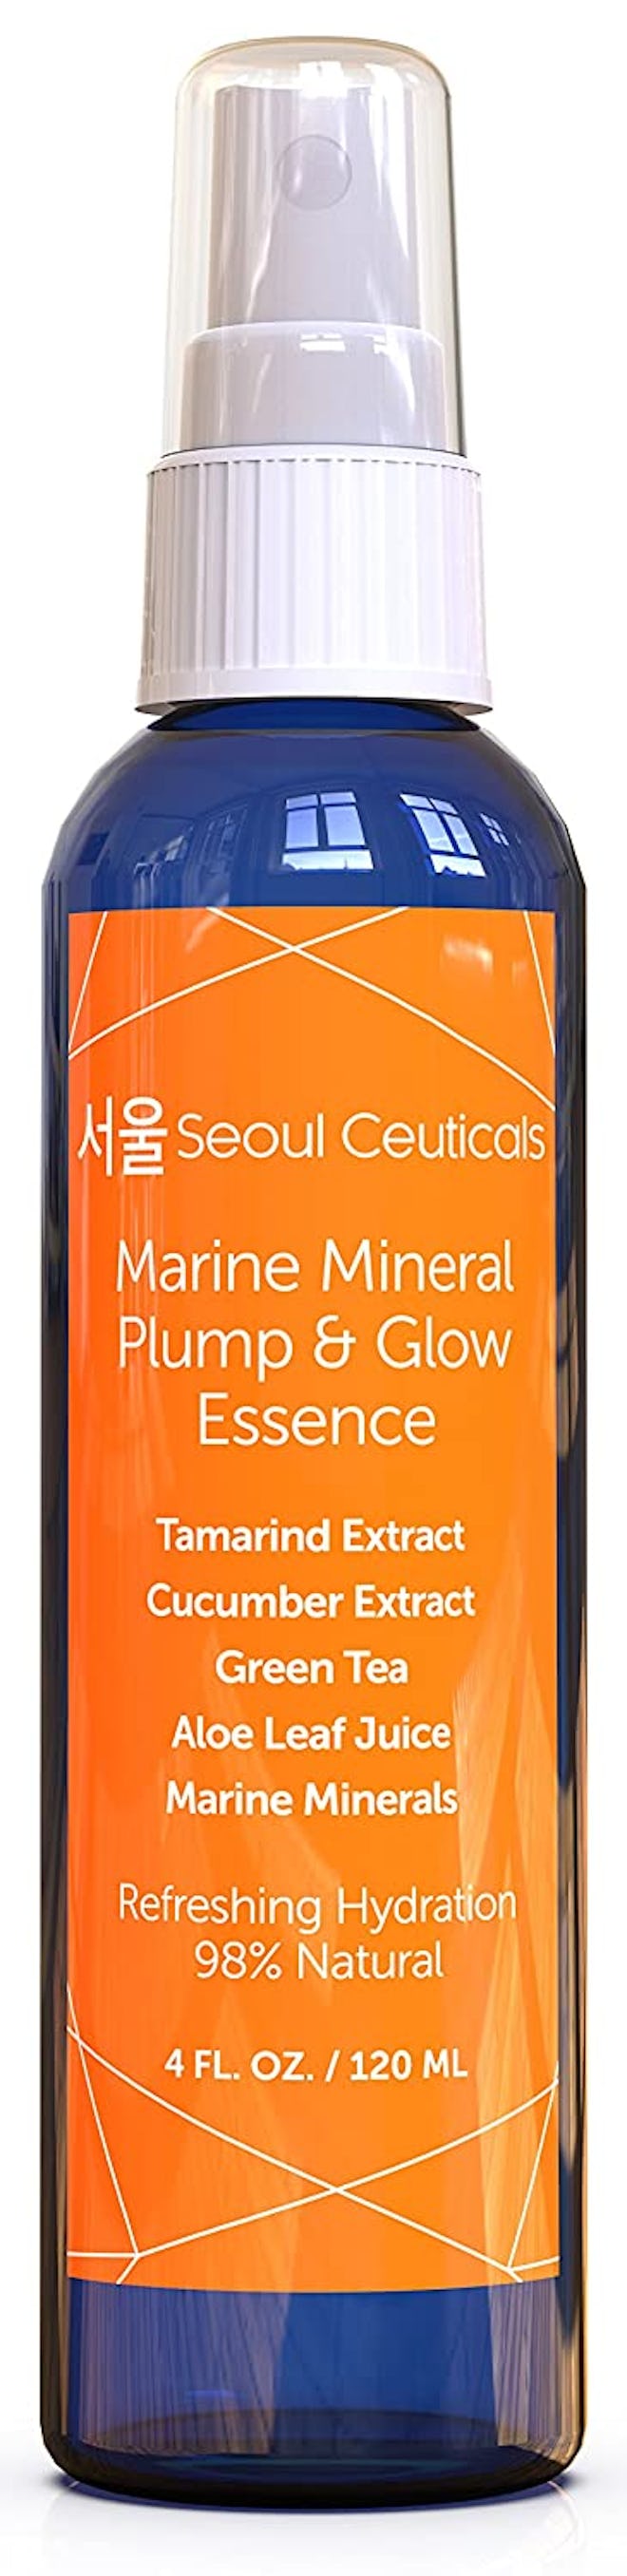 Seoul Ceuticals Marine Mineral Plump & Glow Essence (4 Oz)